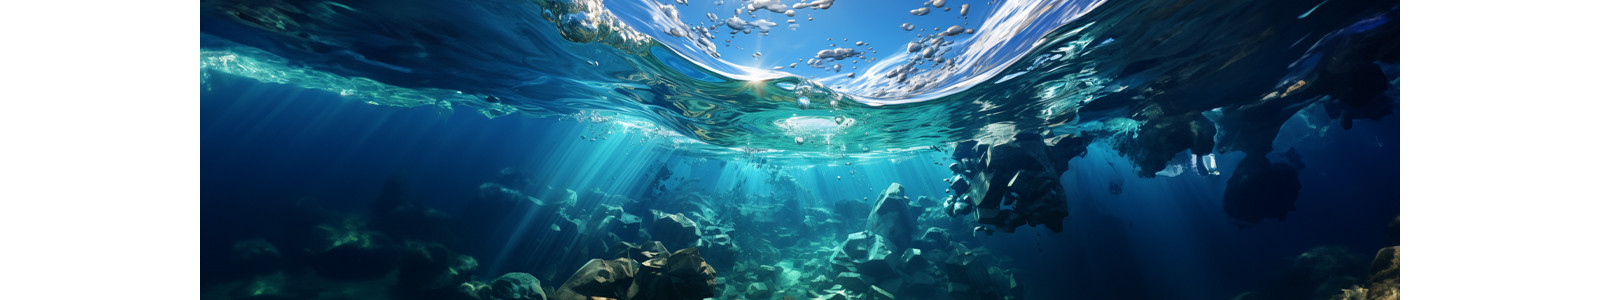 Underwater view of ocean